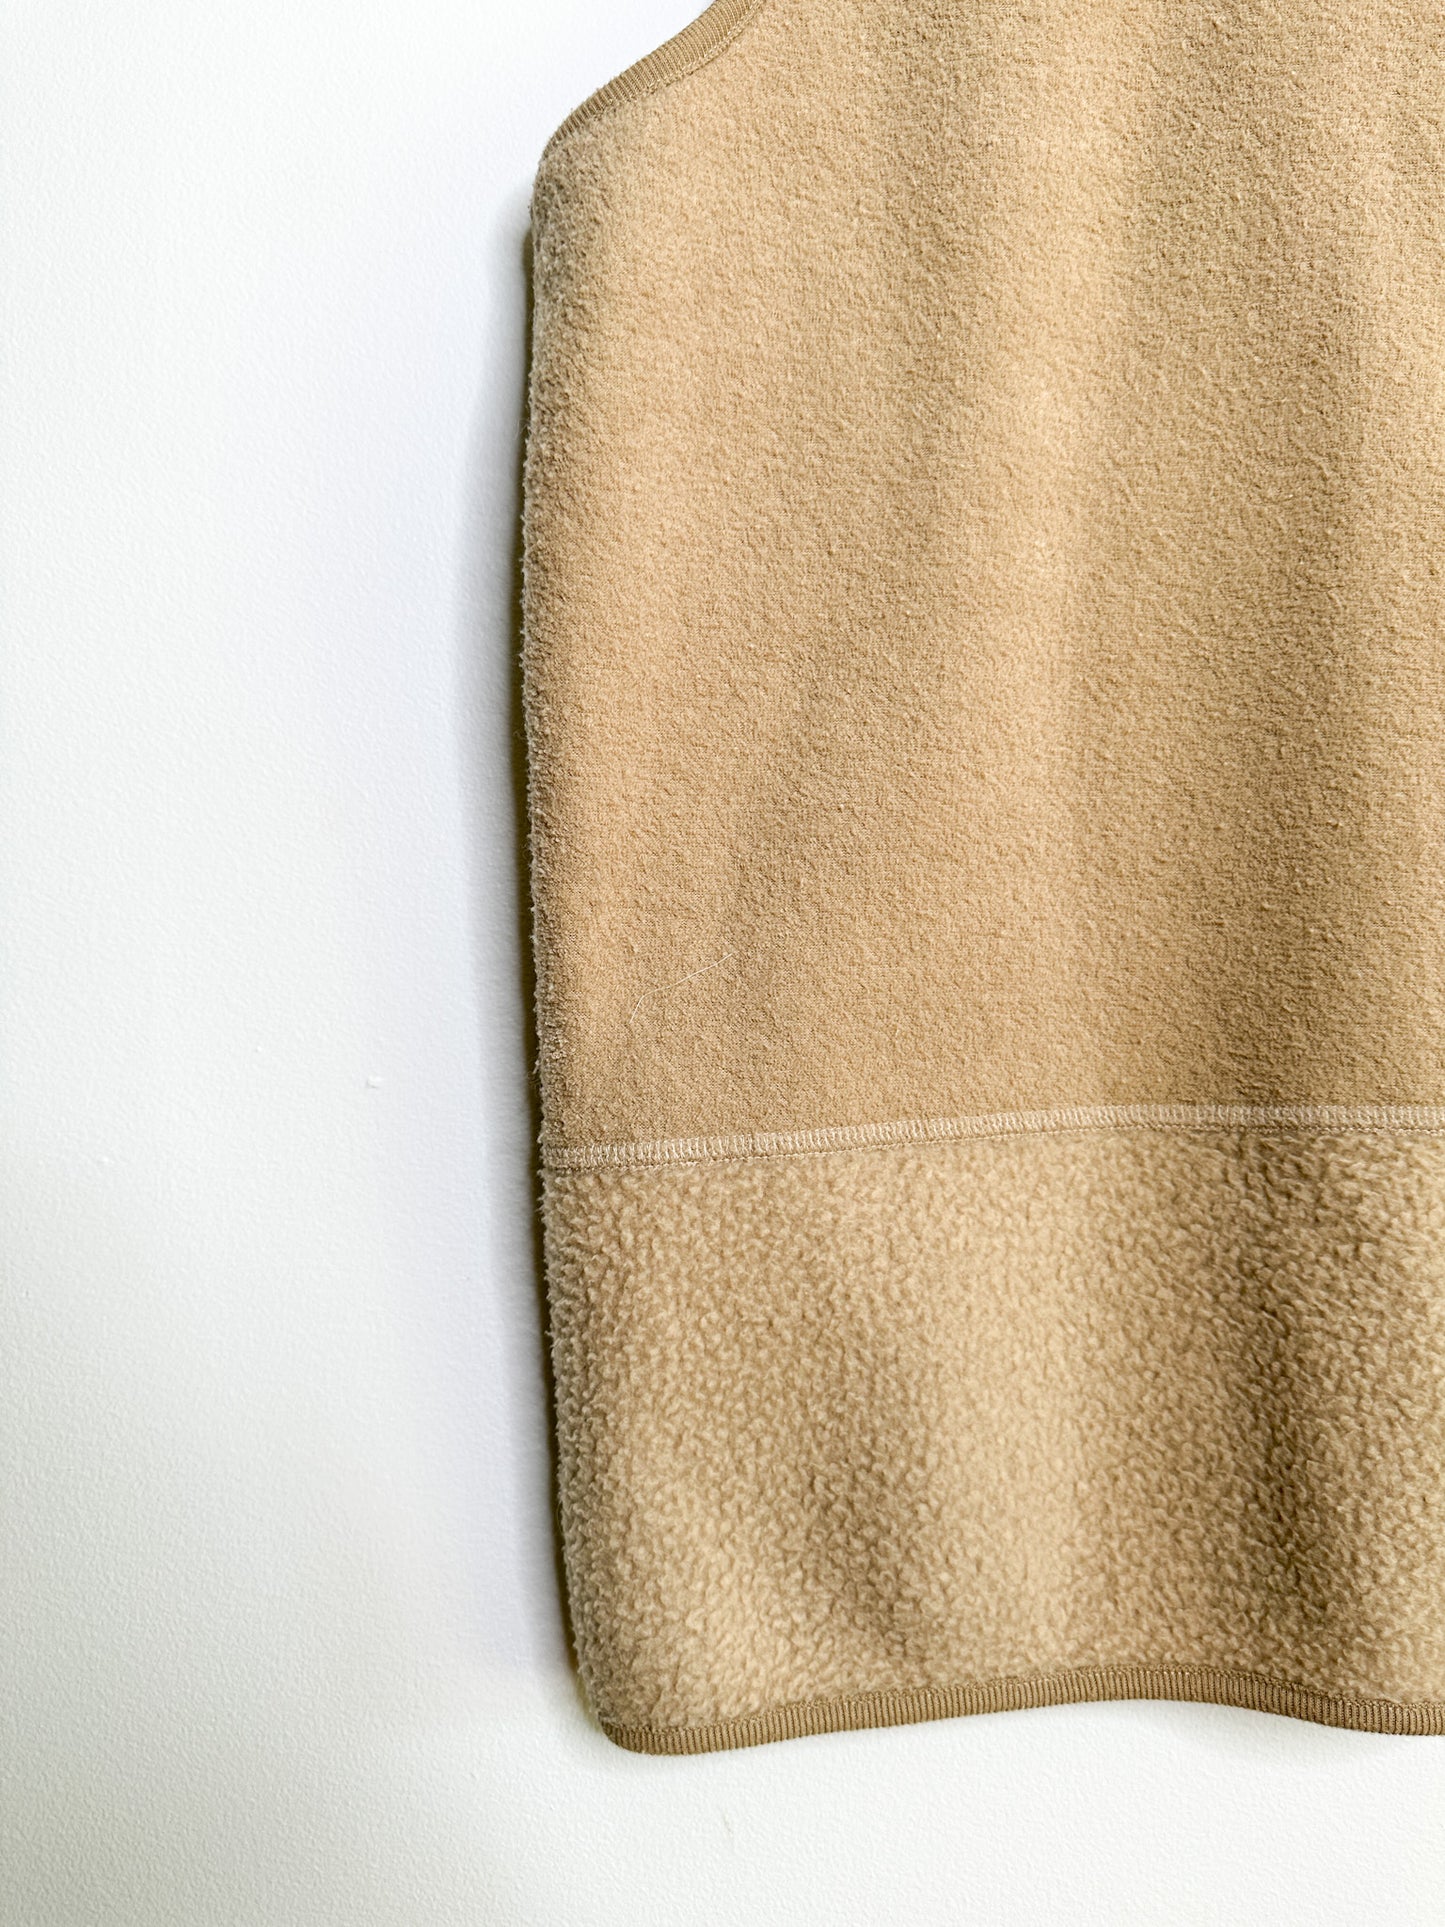 Traditional Country Collection Button Front Fleece Vest | Beige Fleece Vest Size: M